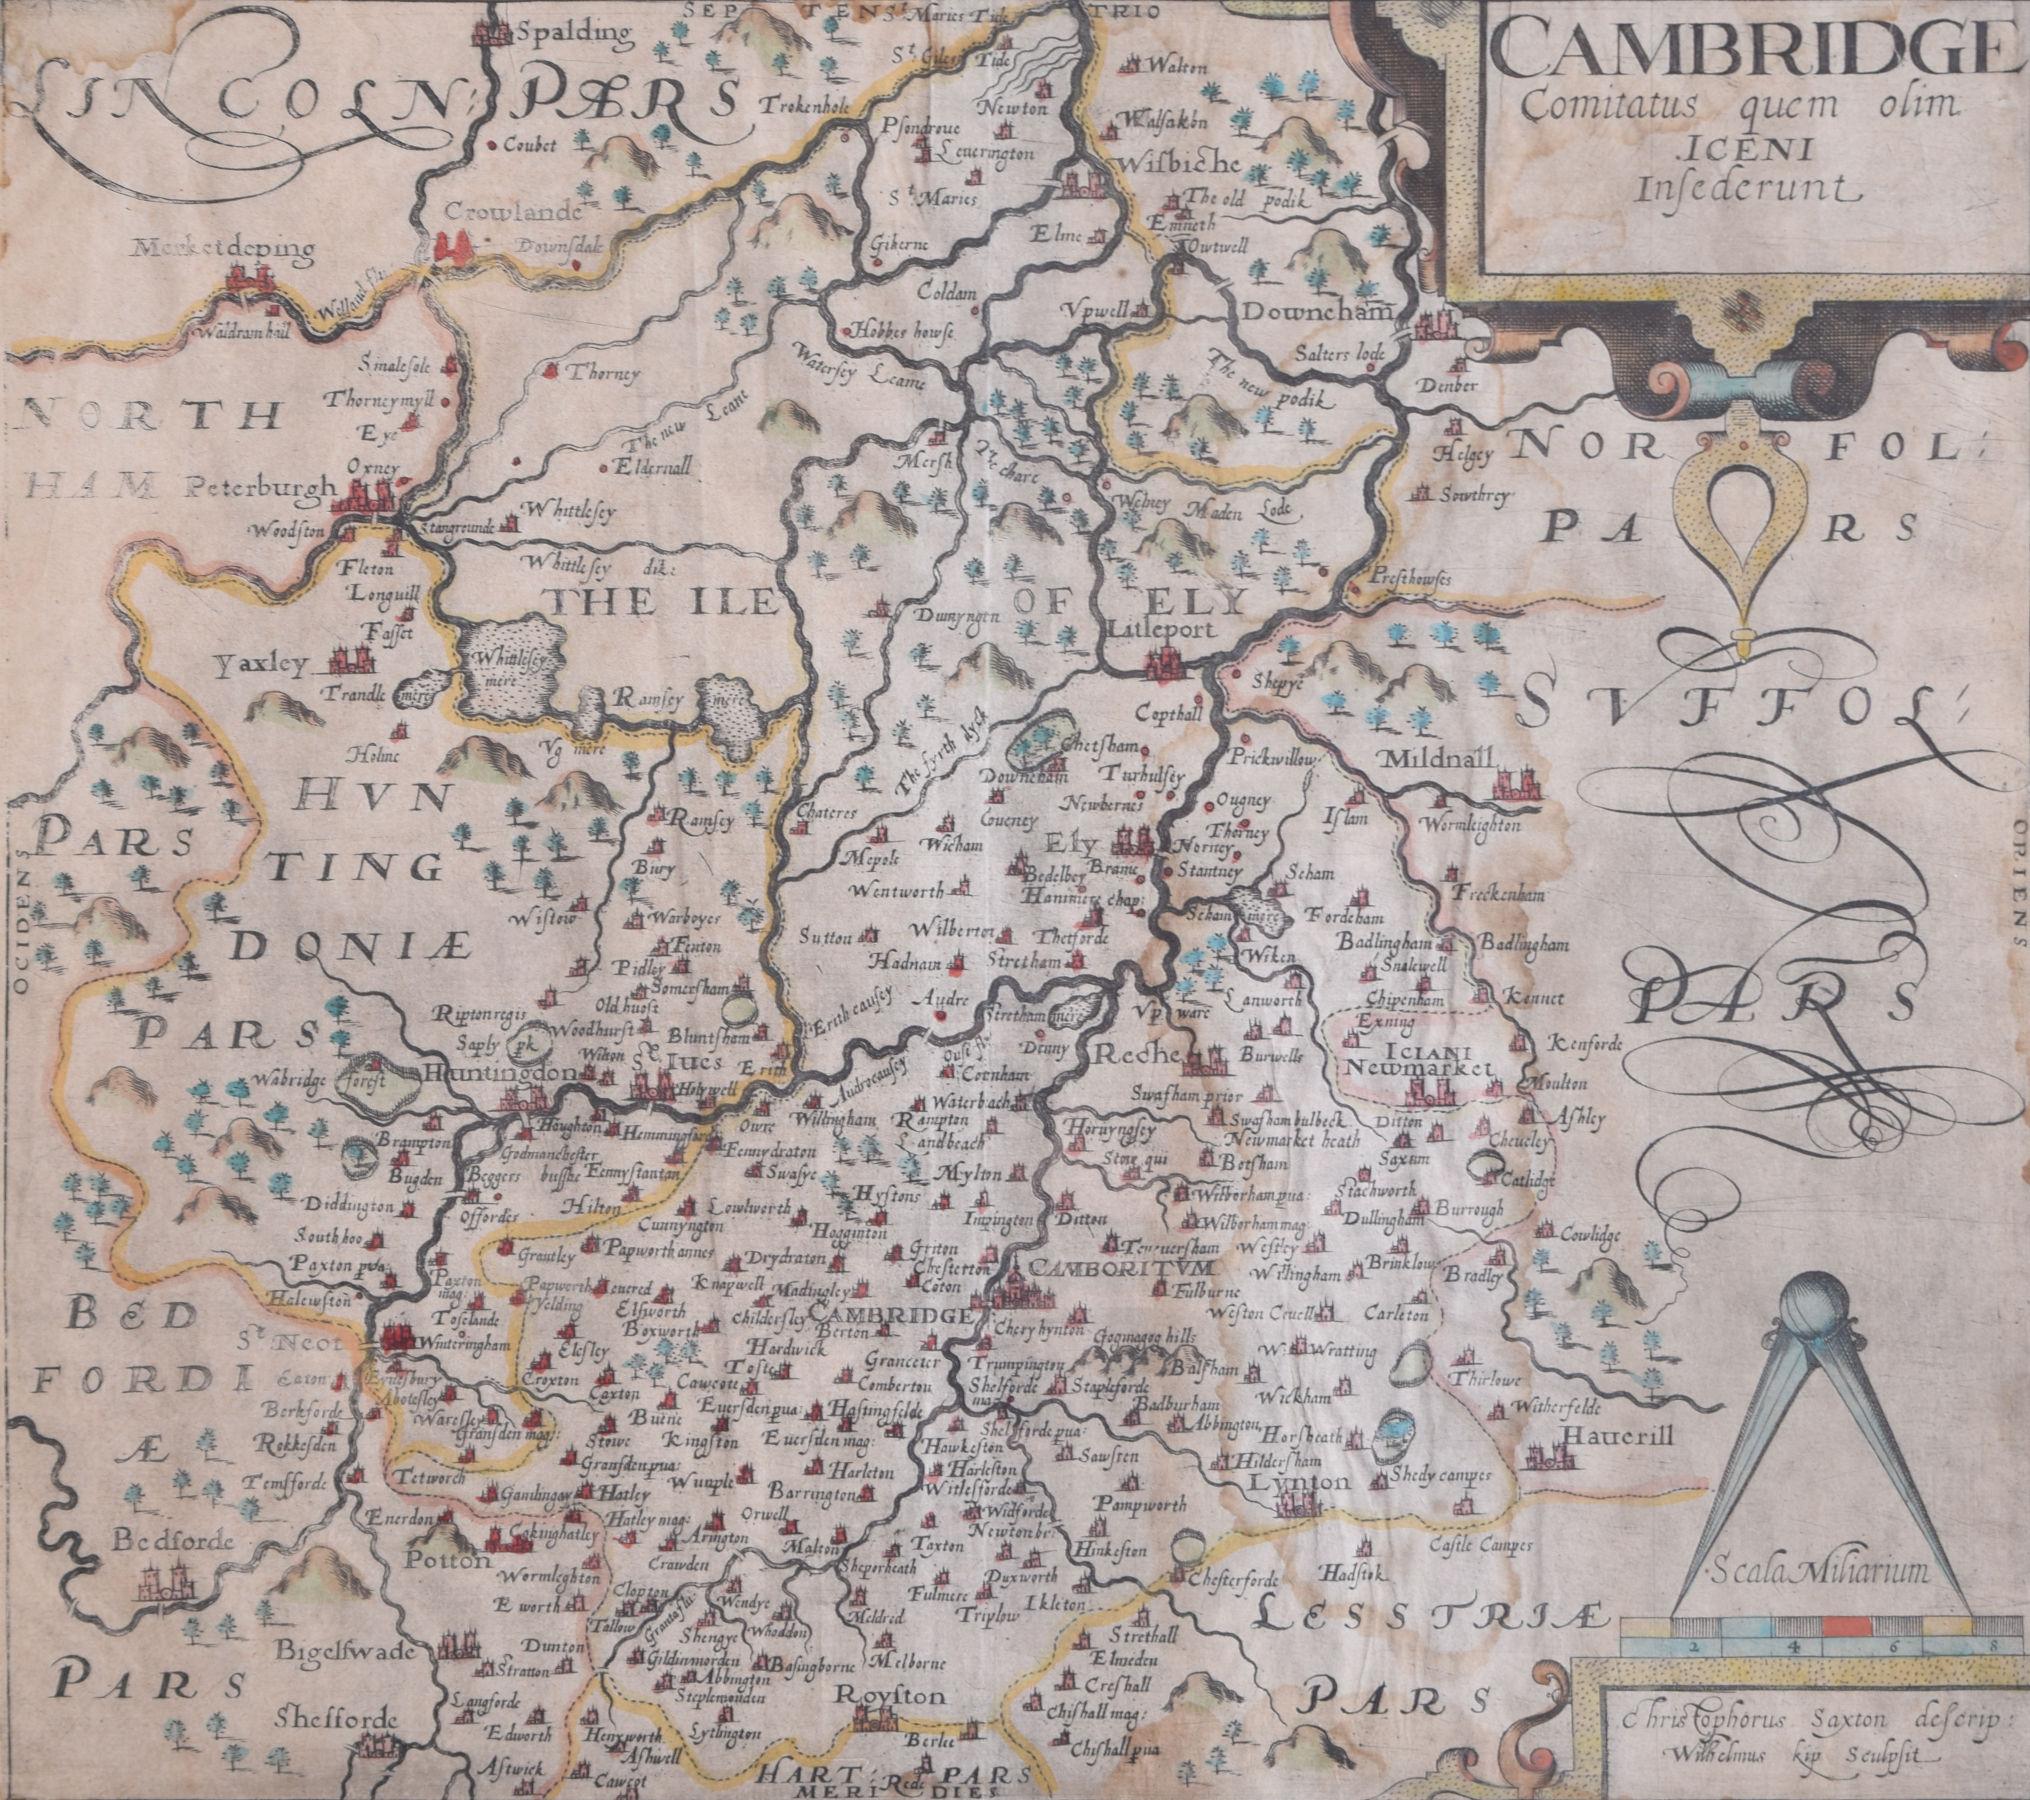 Christopher Saxton Landscape Print - Cambridgeshire map 17th century engraving by Kip after Saxton